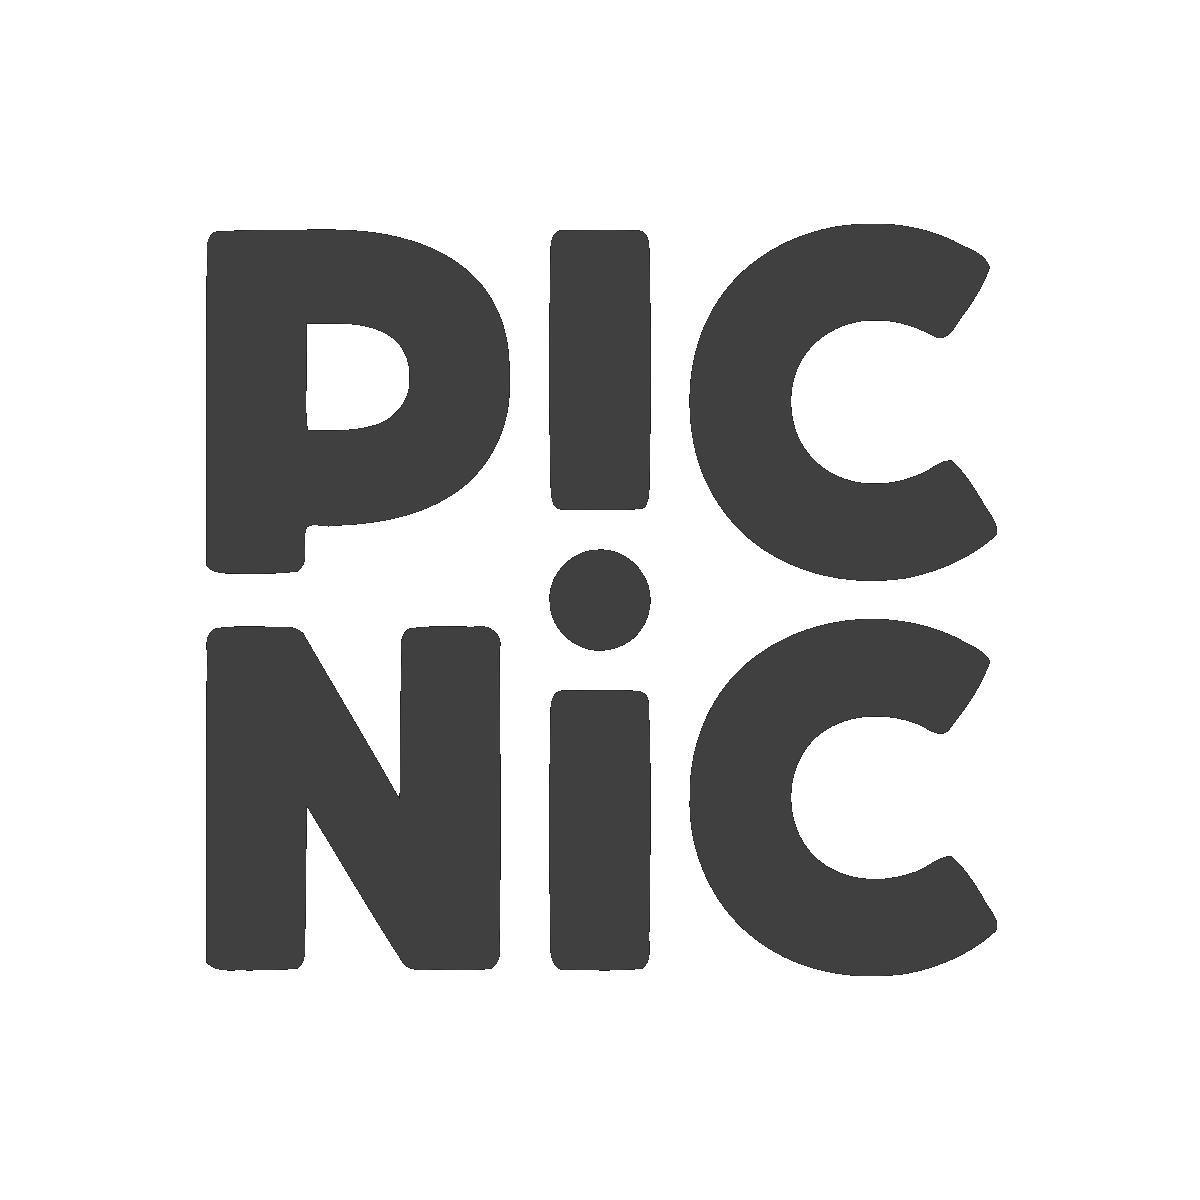 picnic-content-editing.png